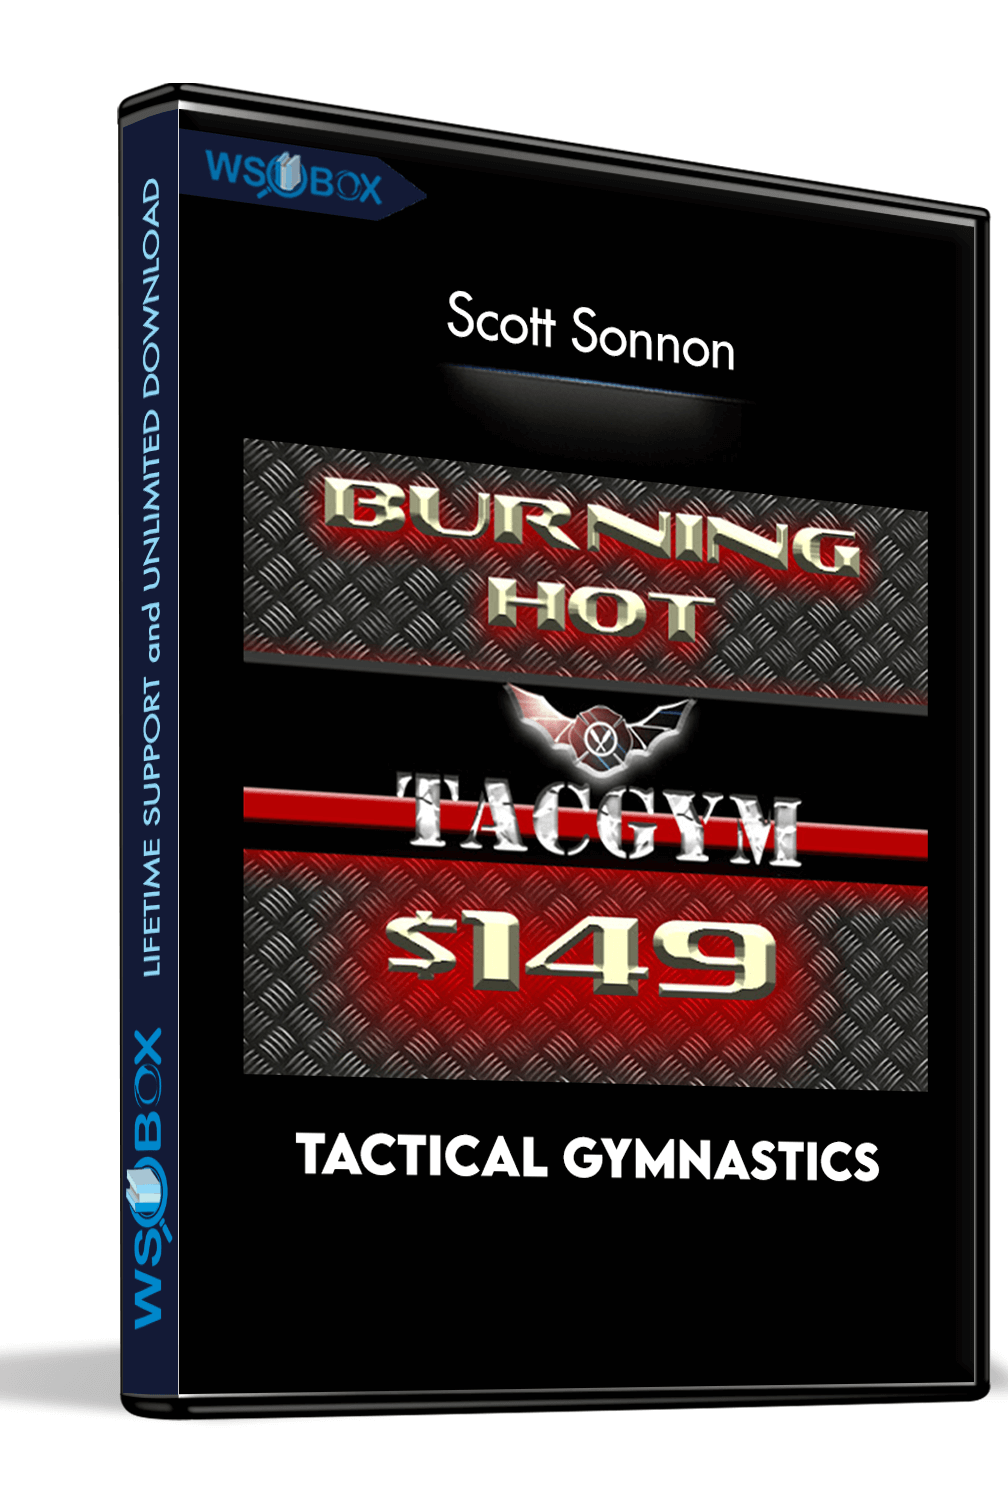 Tactical Gymnastics – Scott Sonnon